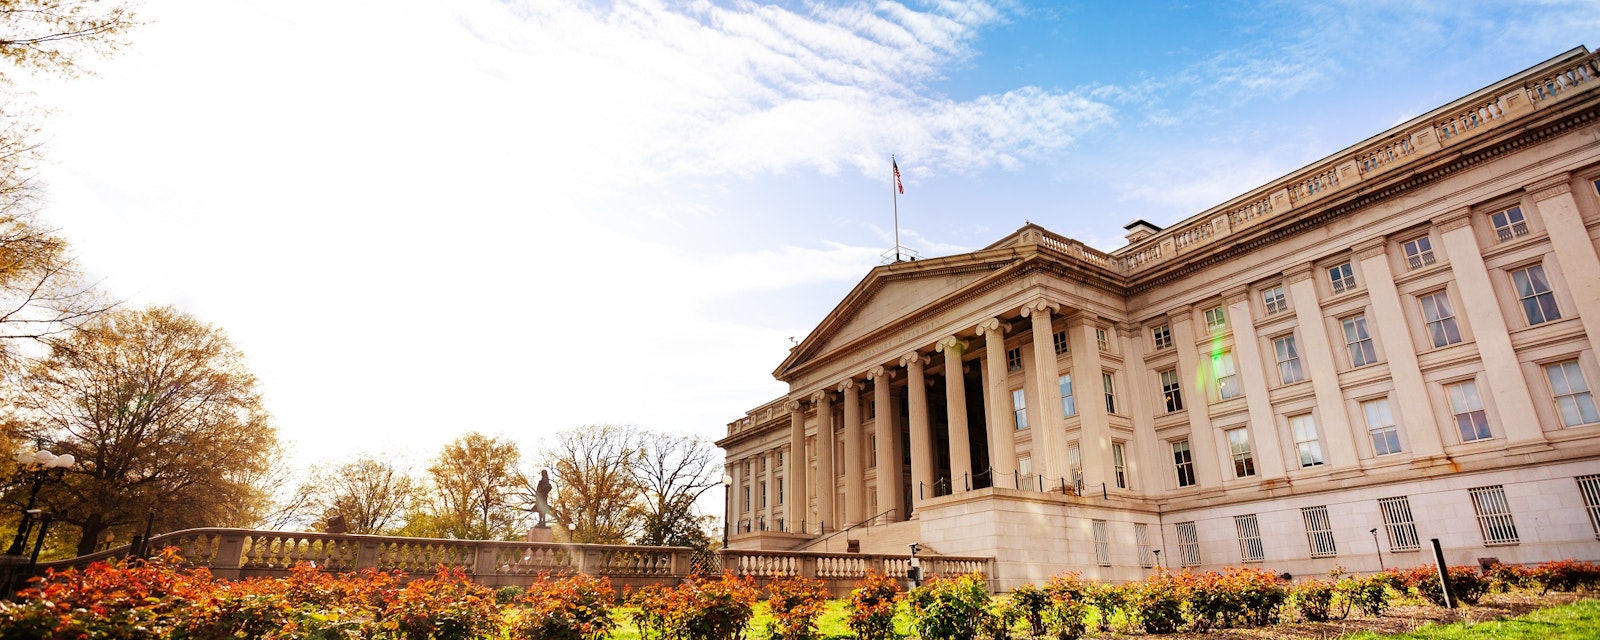 View,Of,Treasury,Building,In,Washington,Dc,National,Historic,Landmark